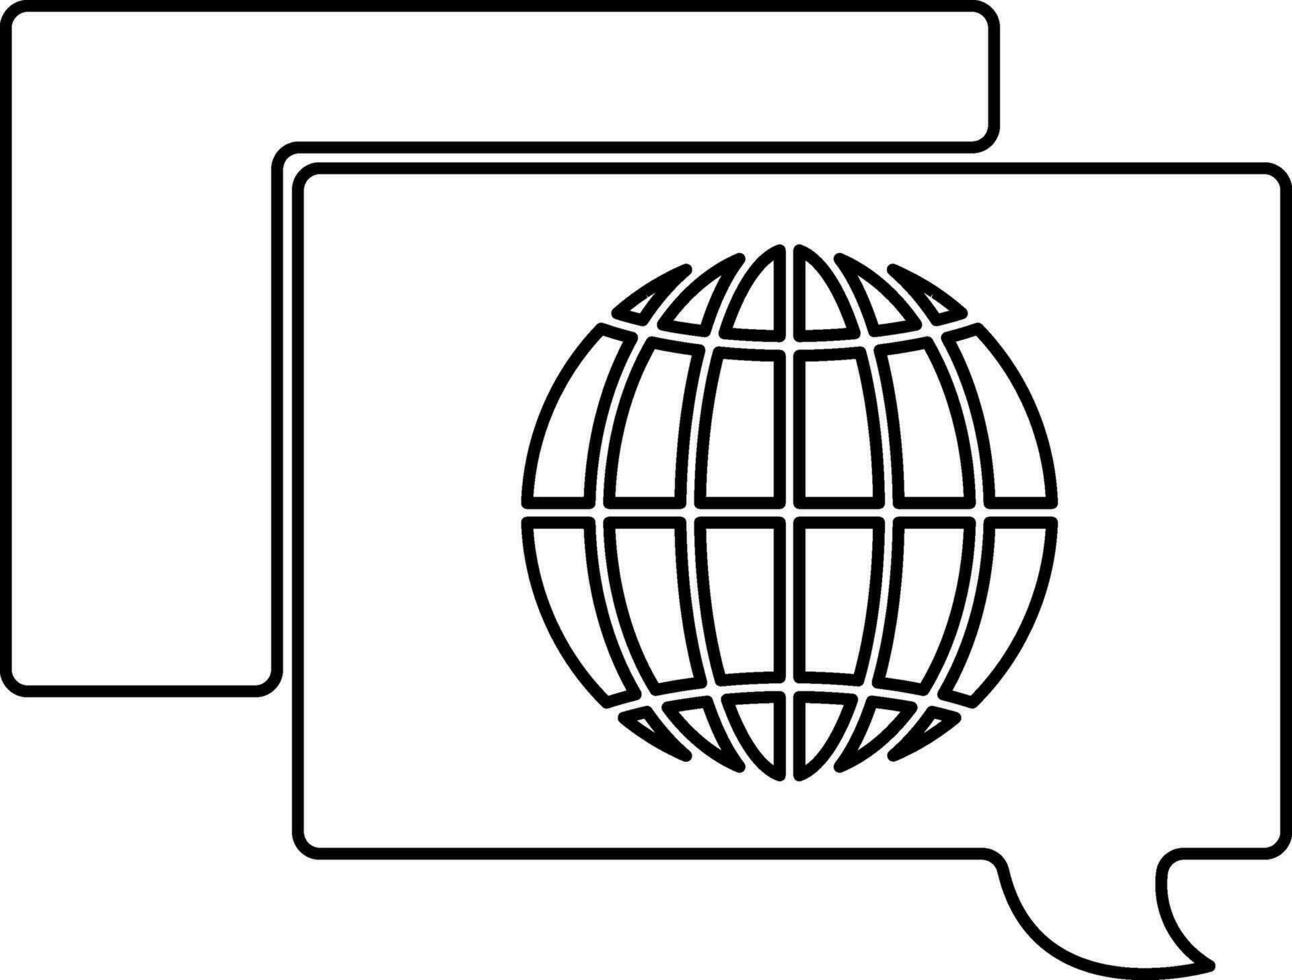 Globe in speech box icon. vector